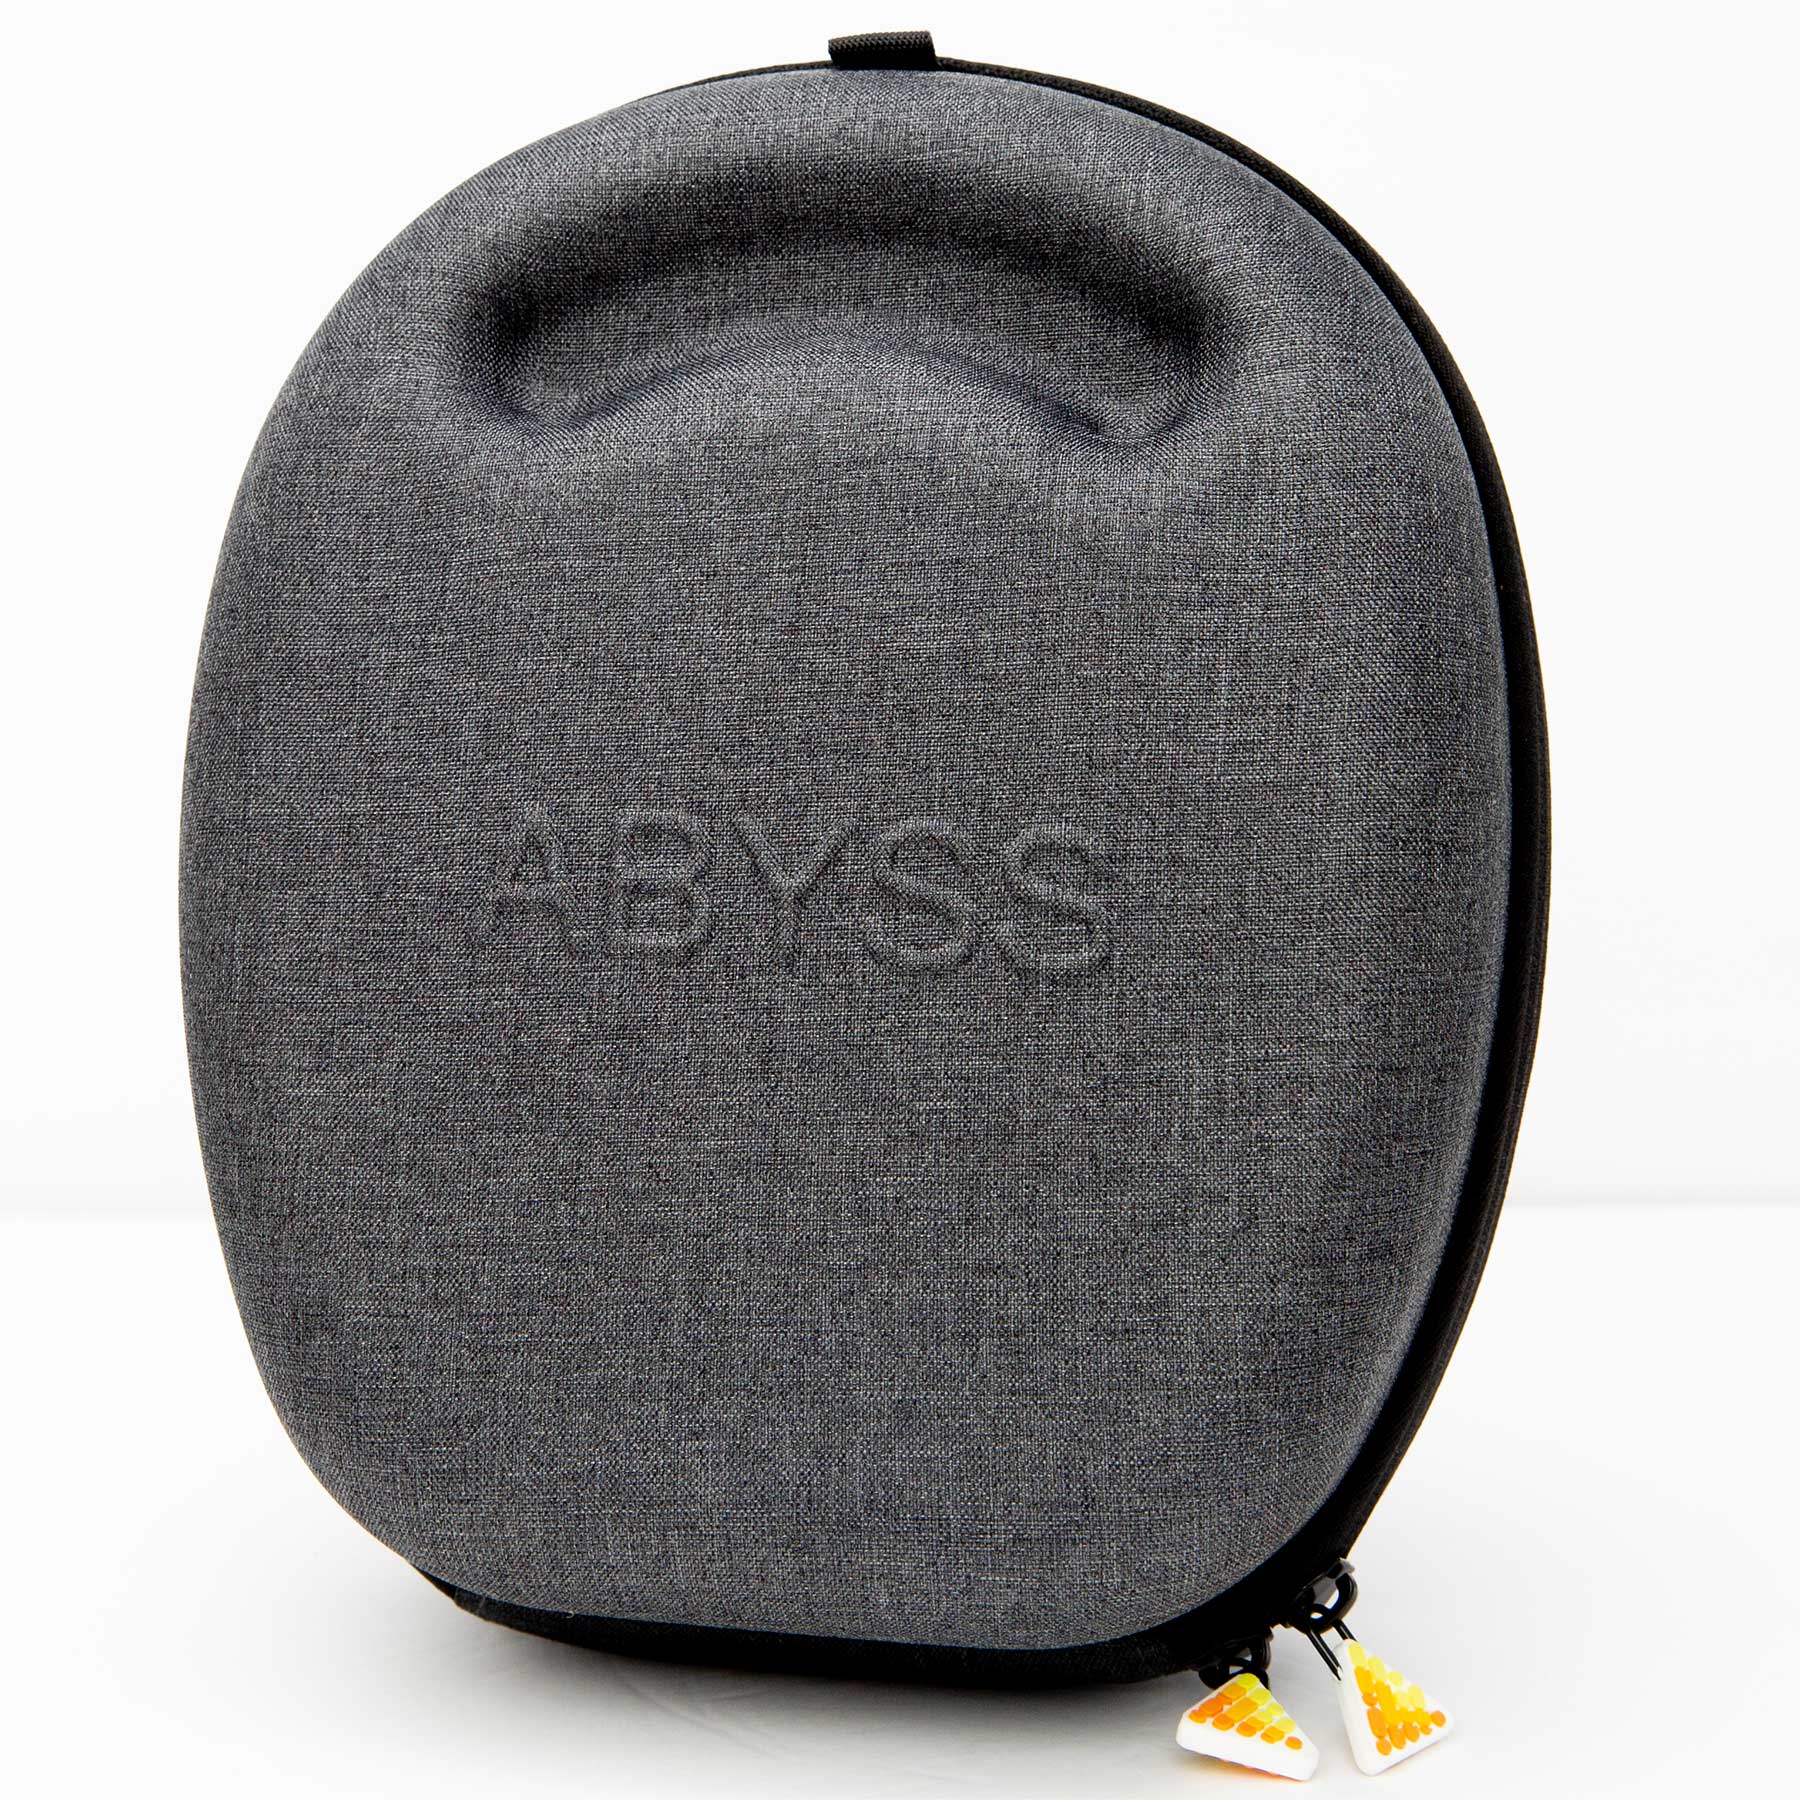 ABYSS DIANA MR Premium High Performance Headphone